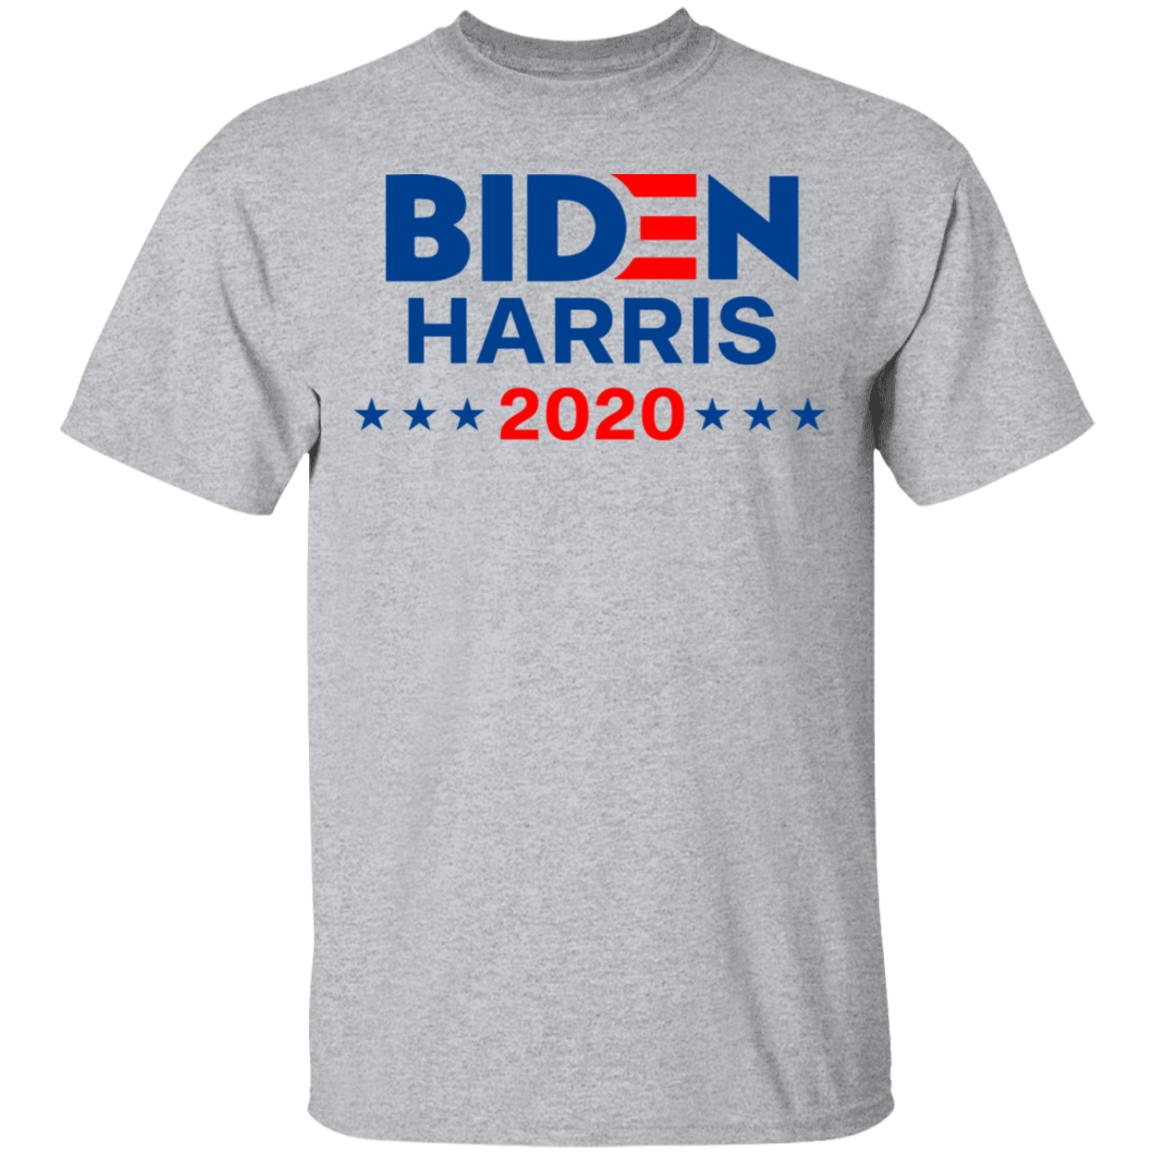 Biden Harris 2020 shirt - Rockatee